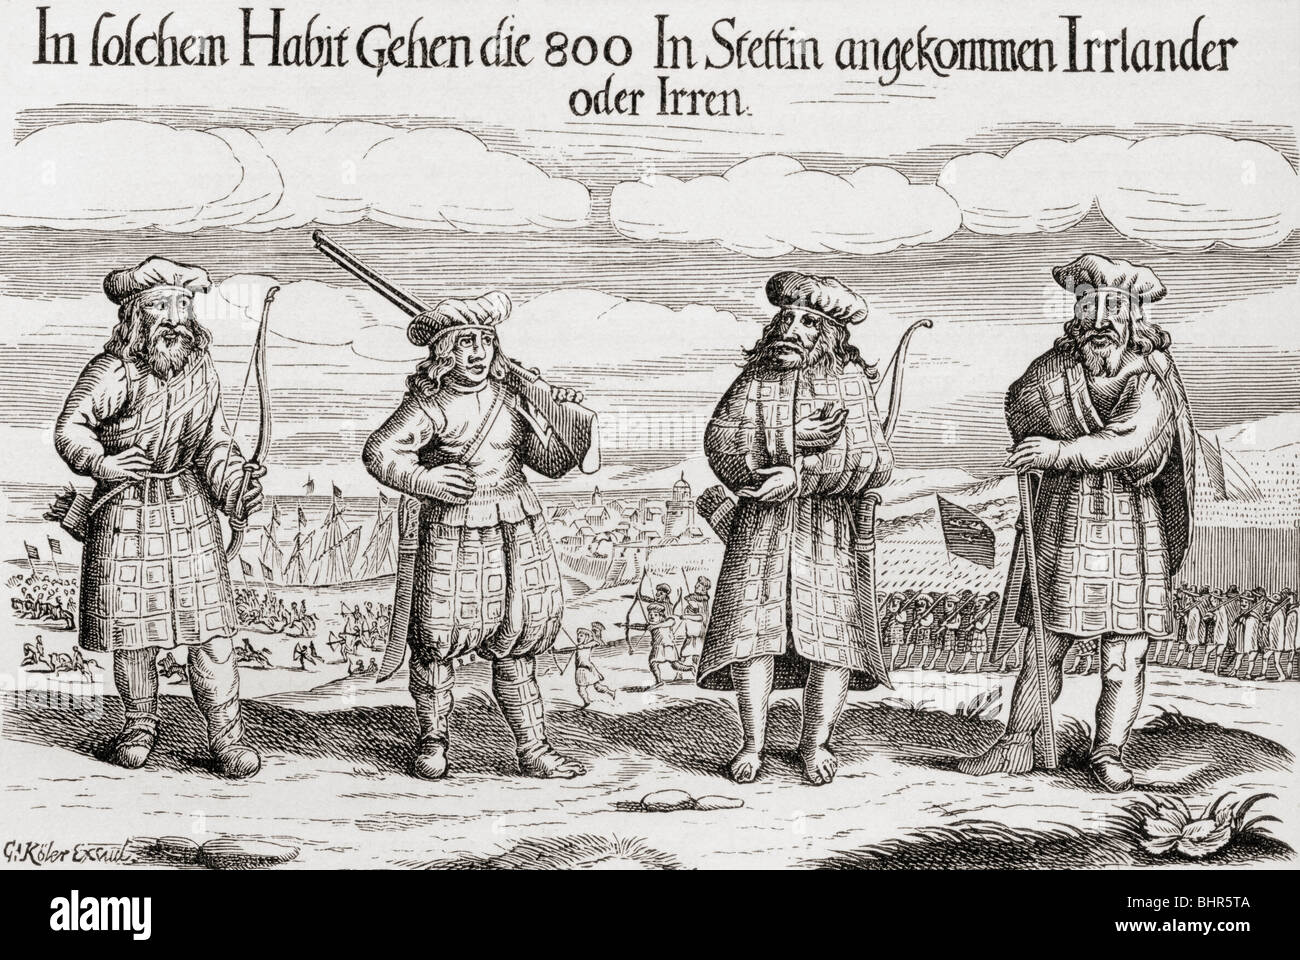 Irish Soldiers in service of Sweden's King Gustavus Adolphus in 1631. Stock Photo